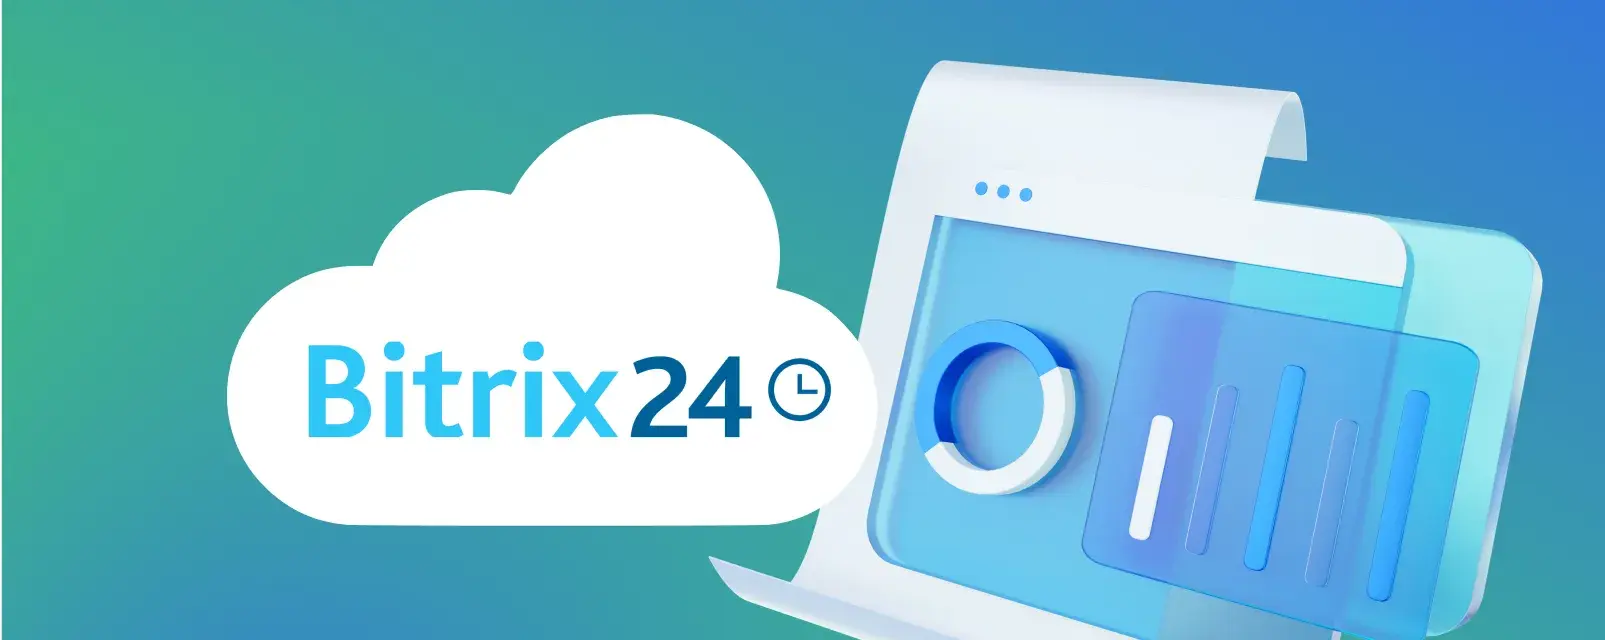 Bitrix24: обзор ВРМ системы от компании Битрикс